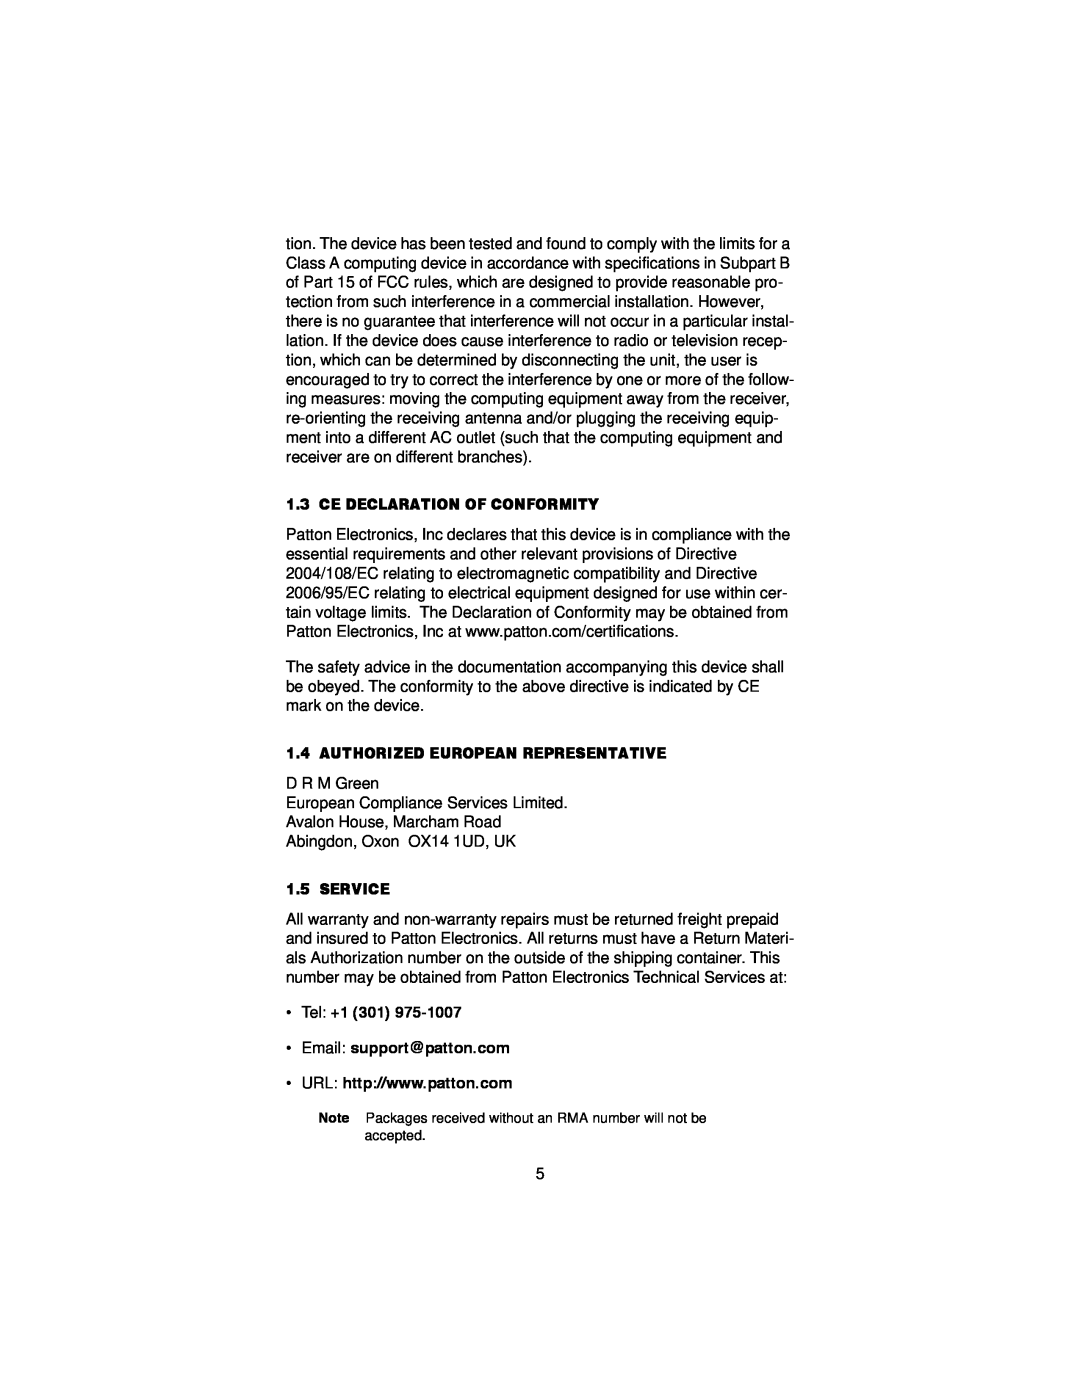 Patton electronic 2150 user manual Ce Declaration Of Conformity, Authorized European Representative, Service 